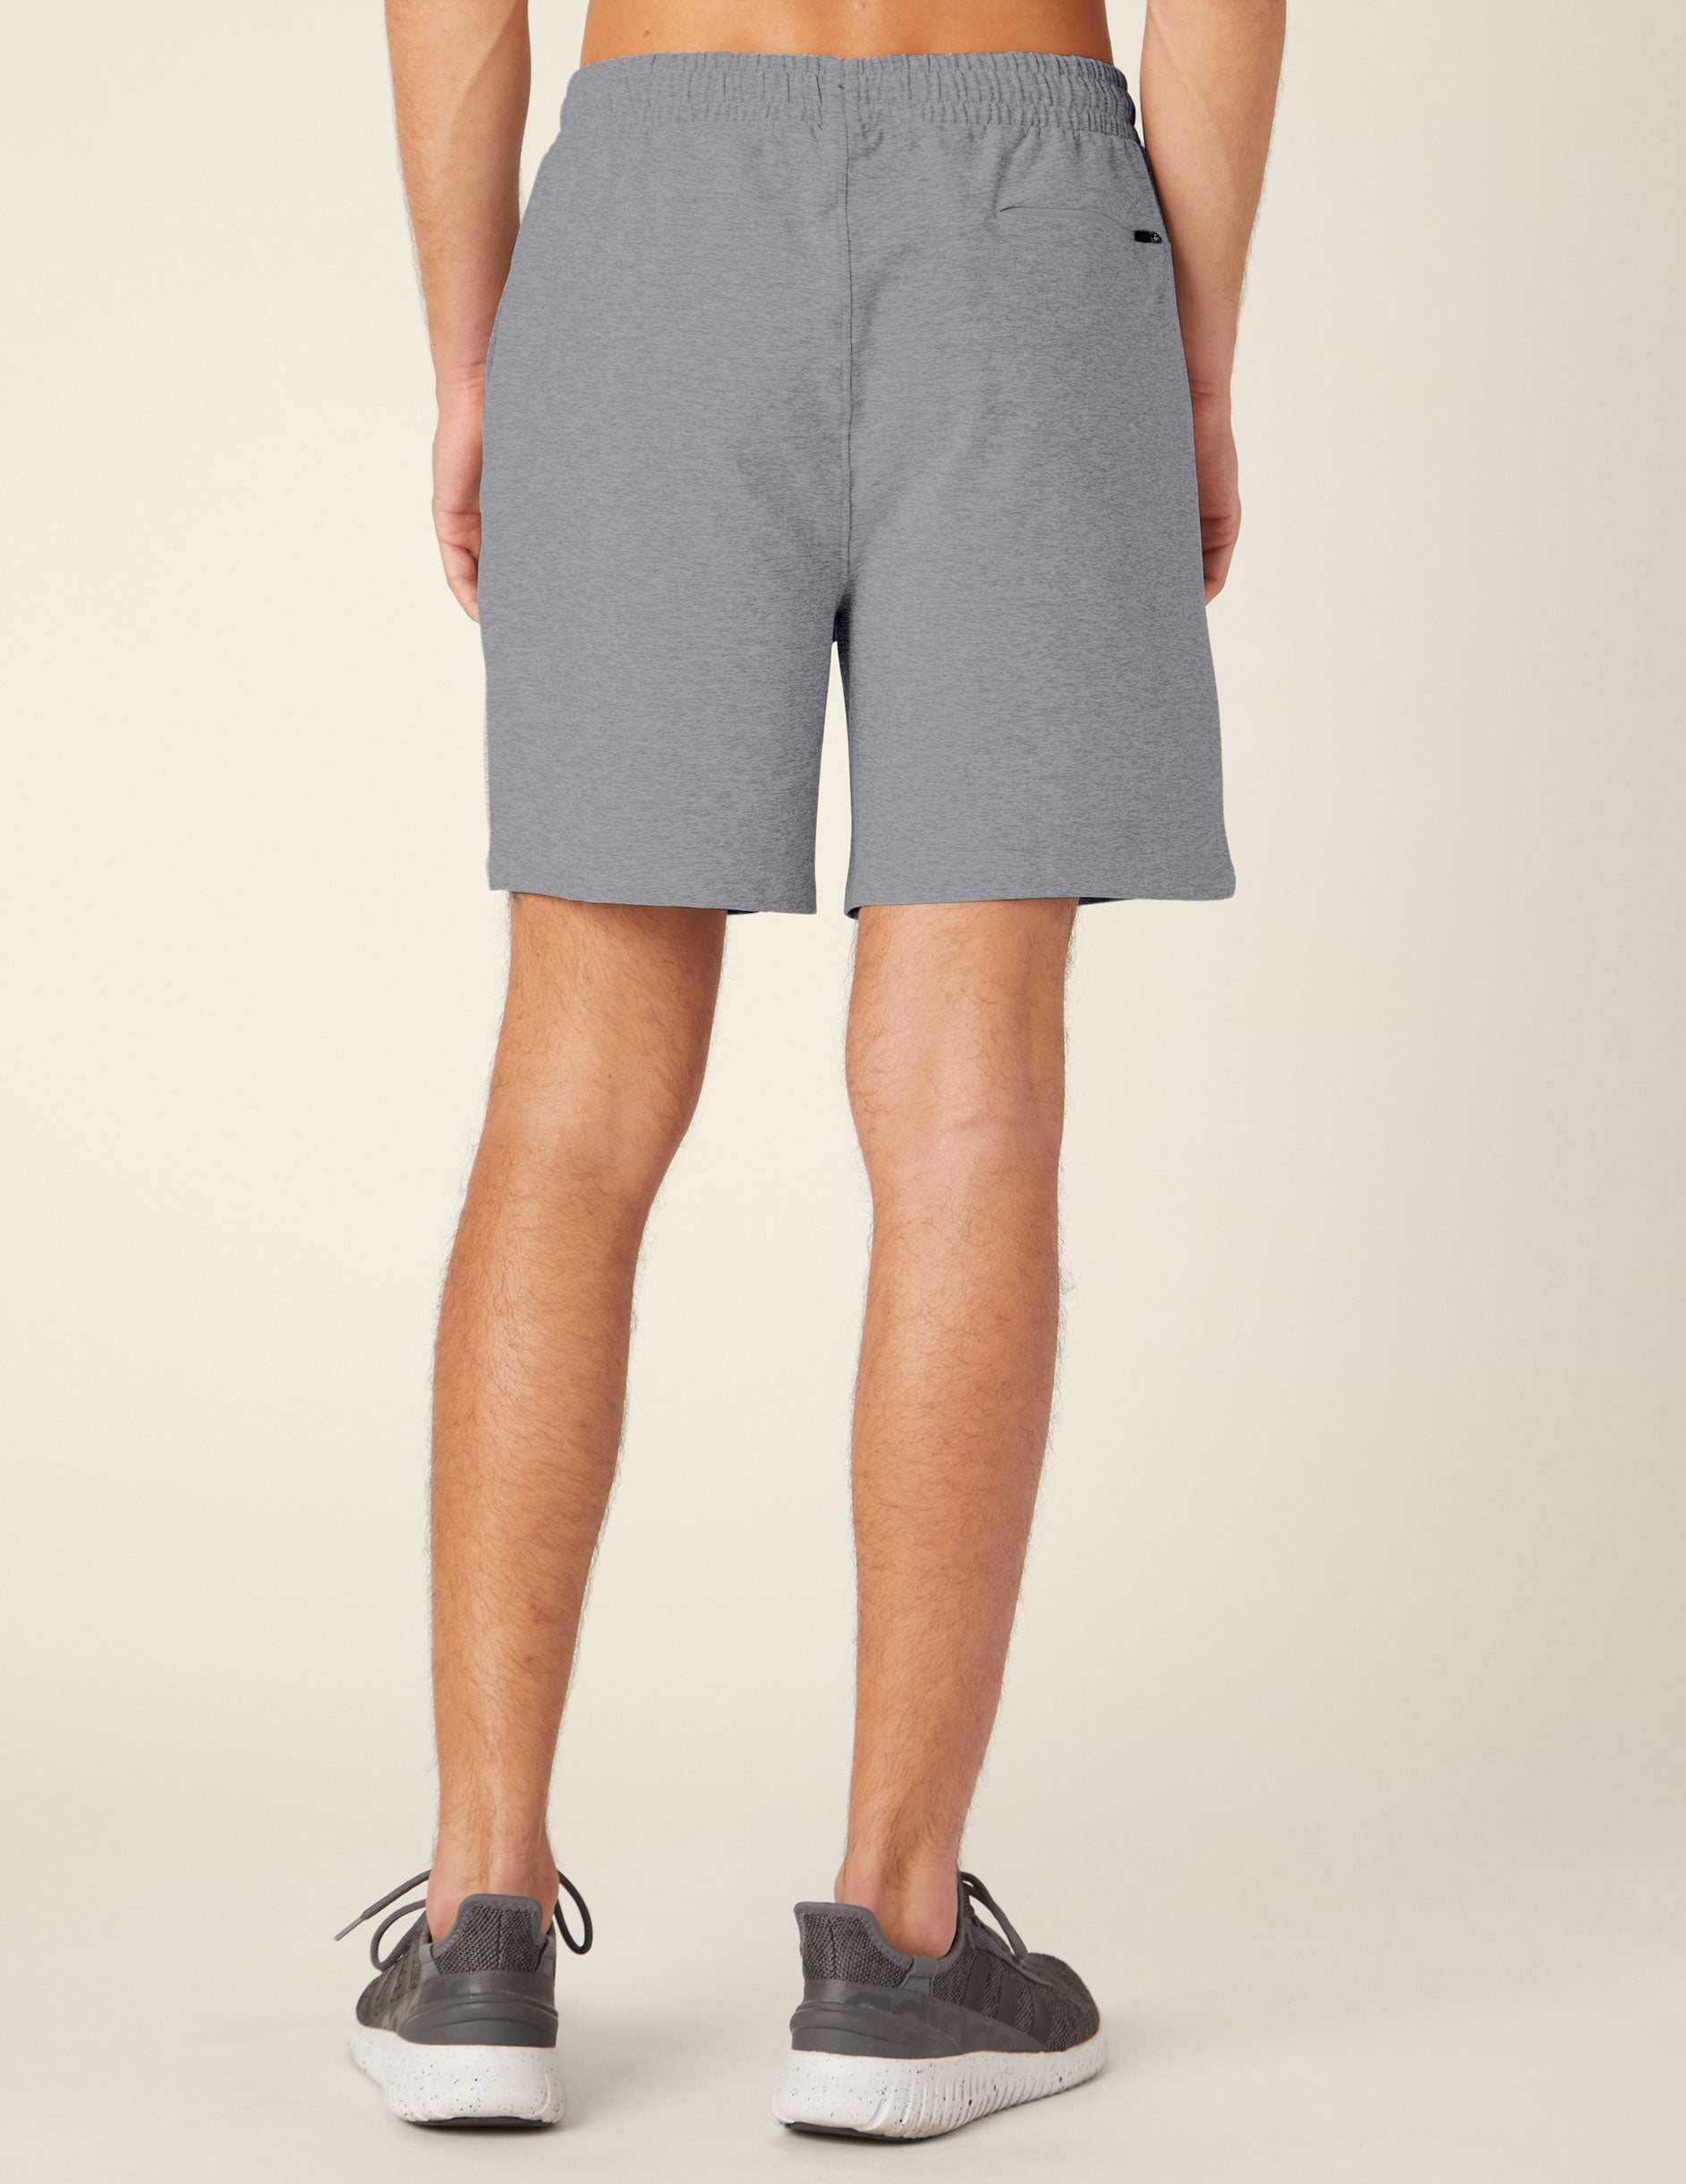 gray mens short with pockets.